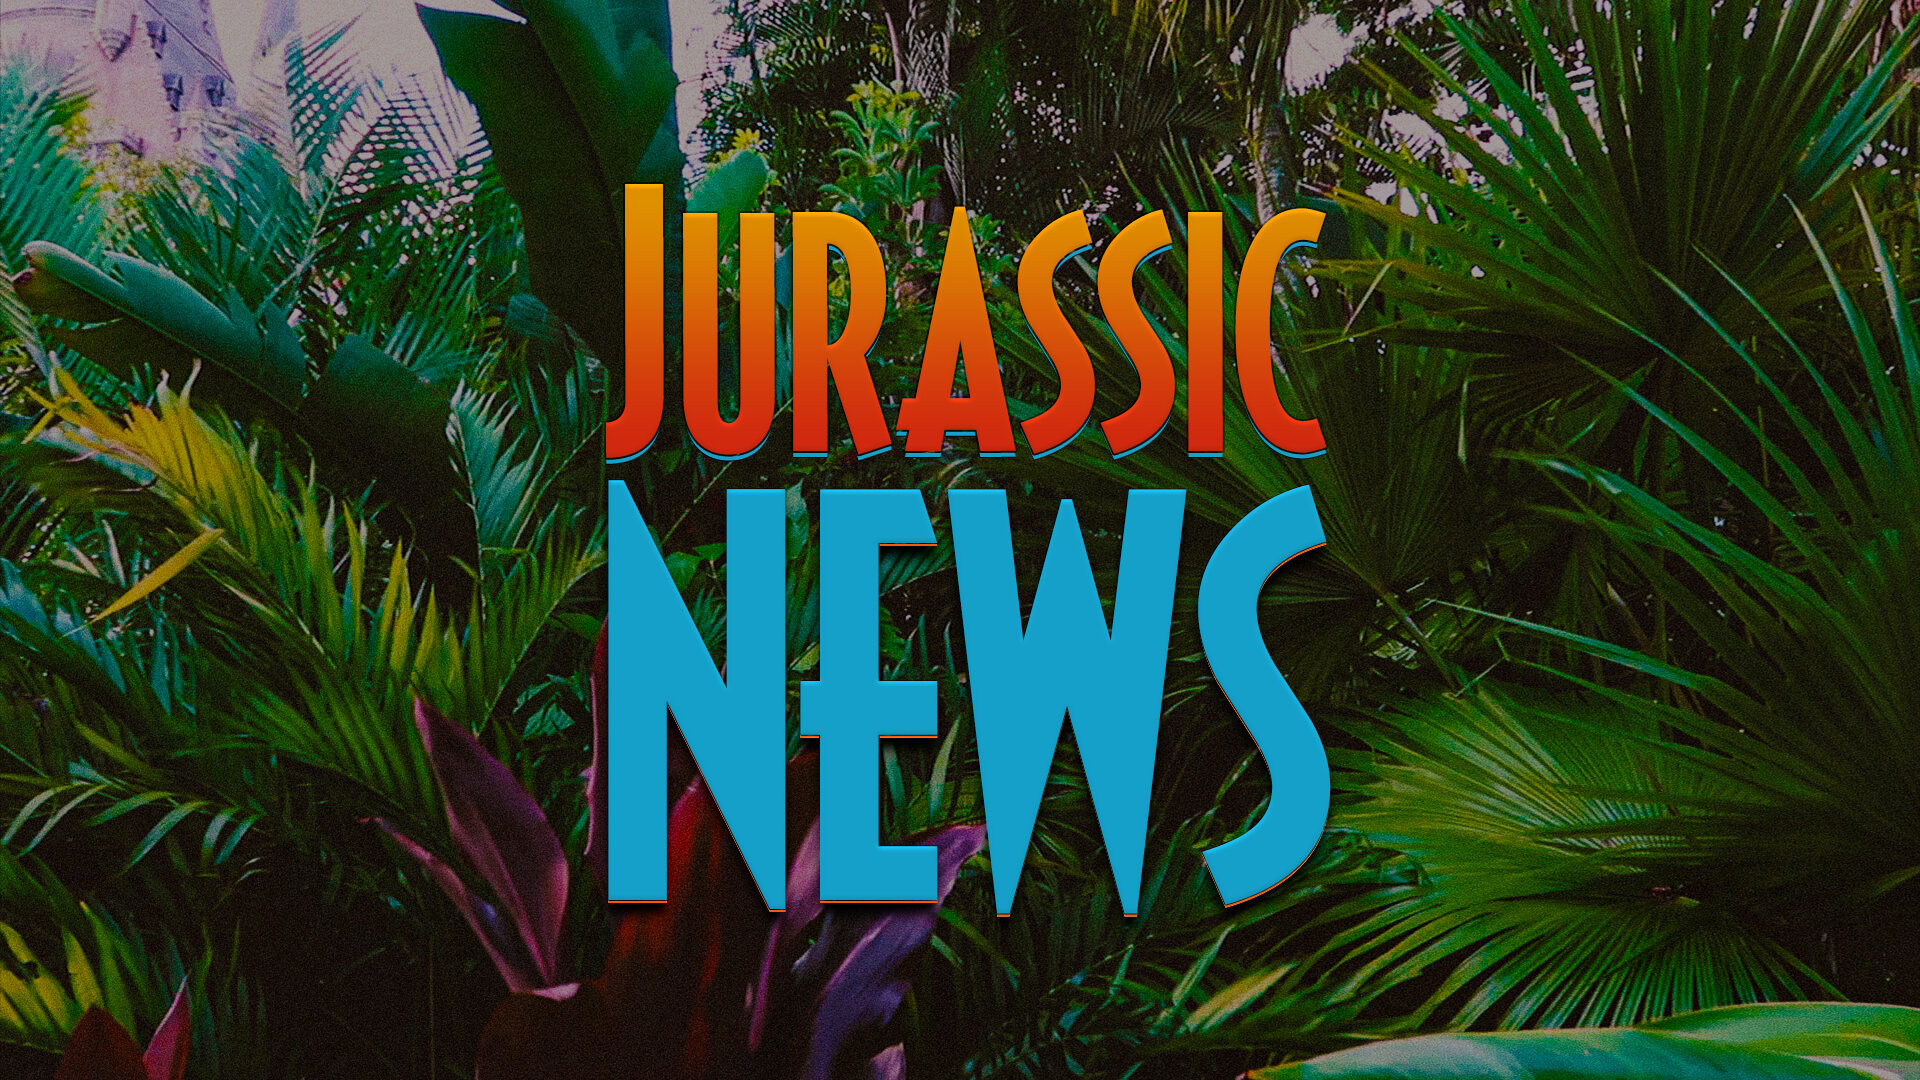 Jurassic News.jpg